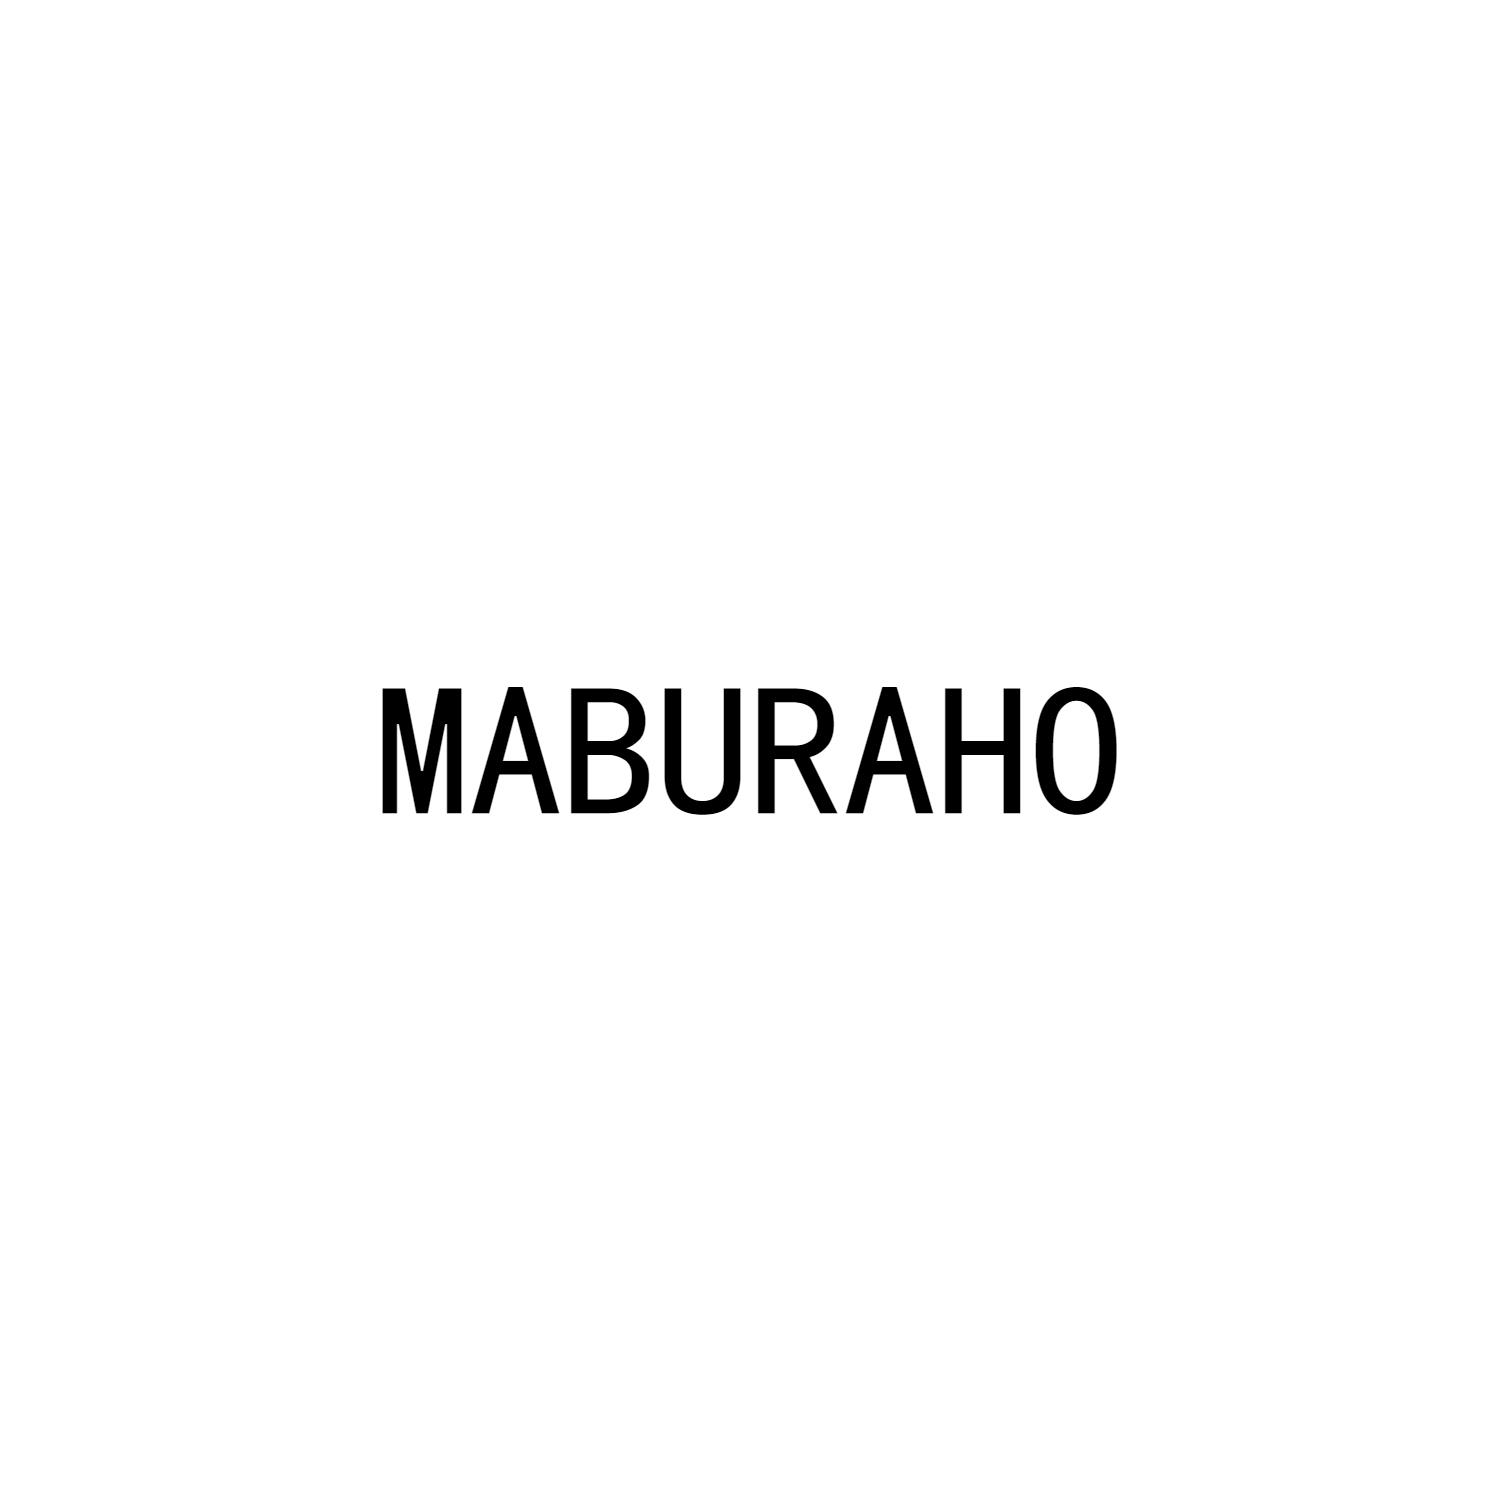 MABURAHO